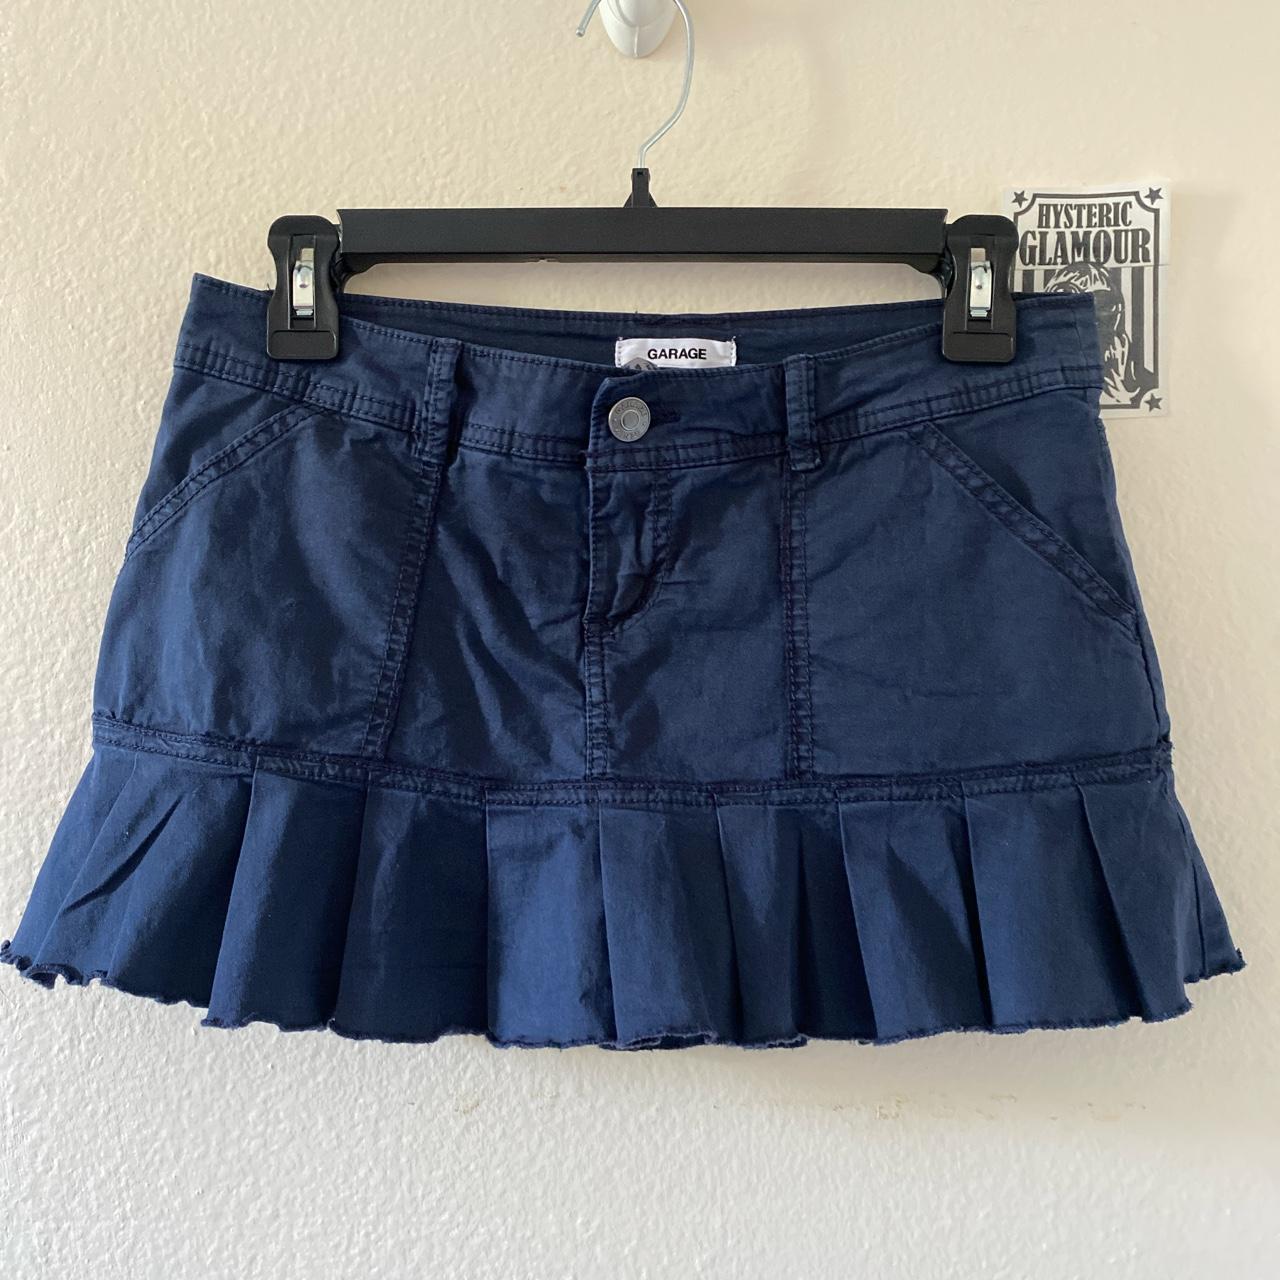 Garage Women's Navy Skirt | Depop